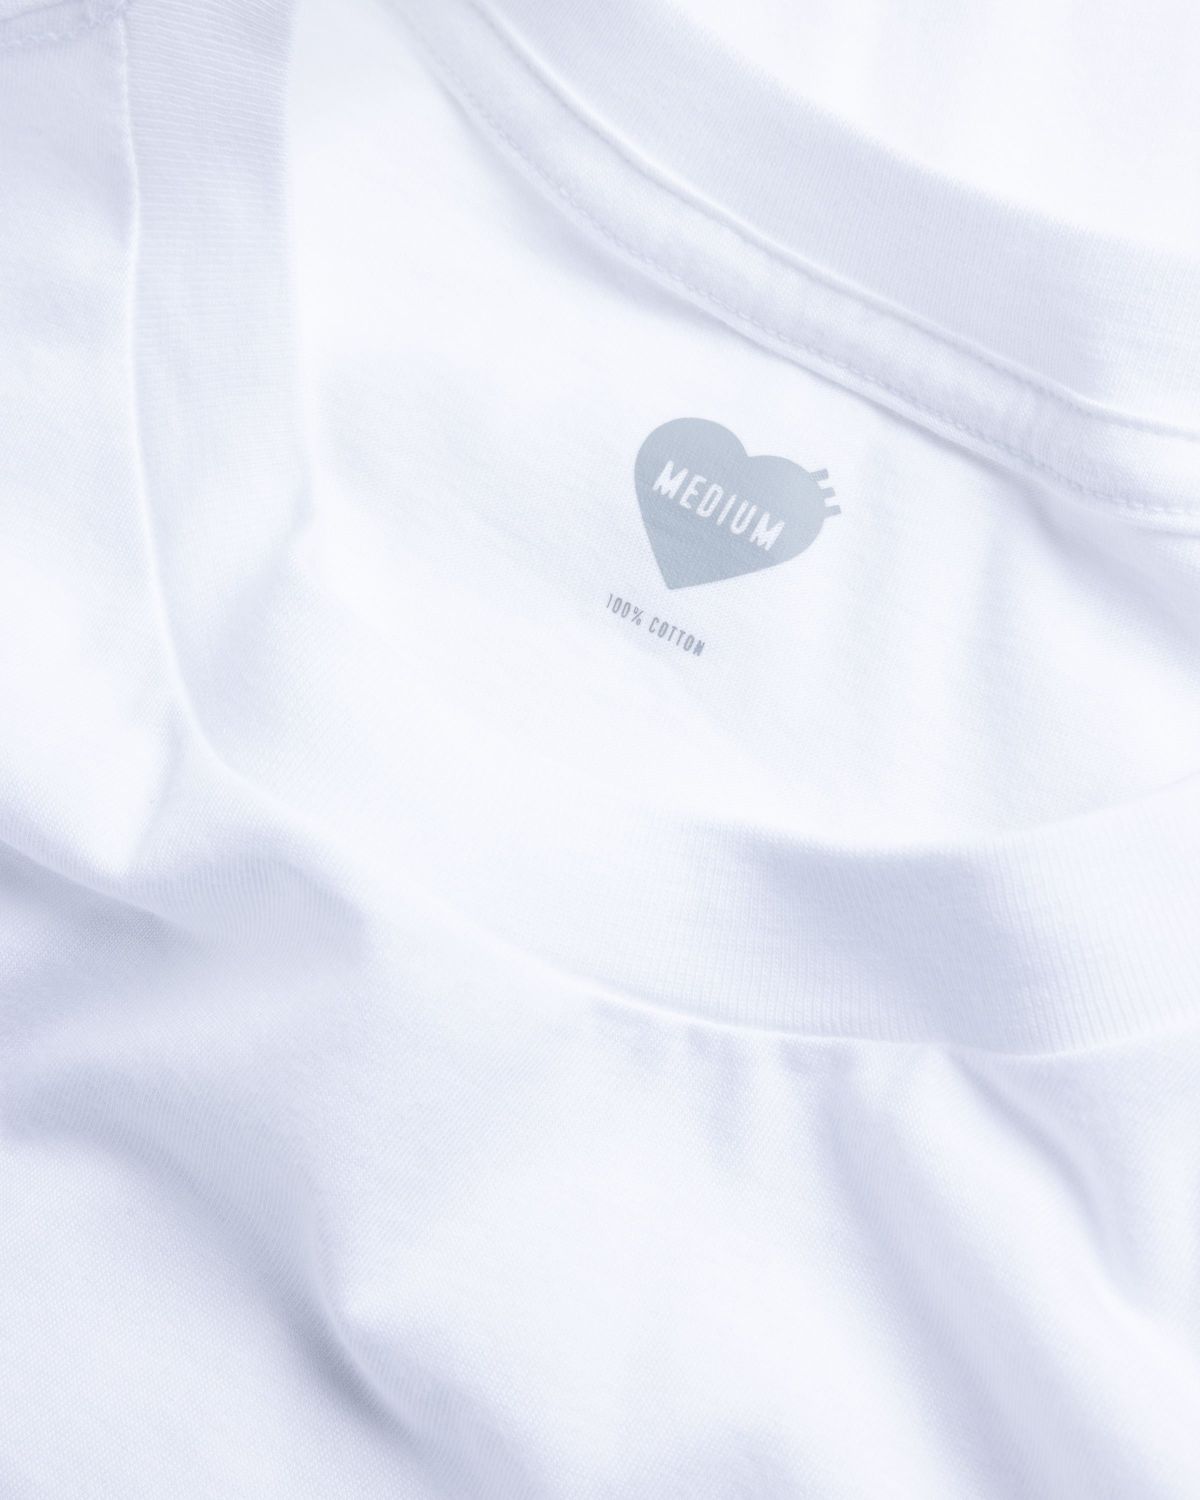 Human Made – 3 Pack T-Shirt Set White | Highsnobiety Shop